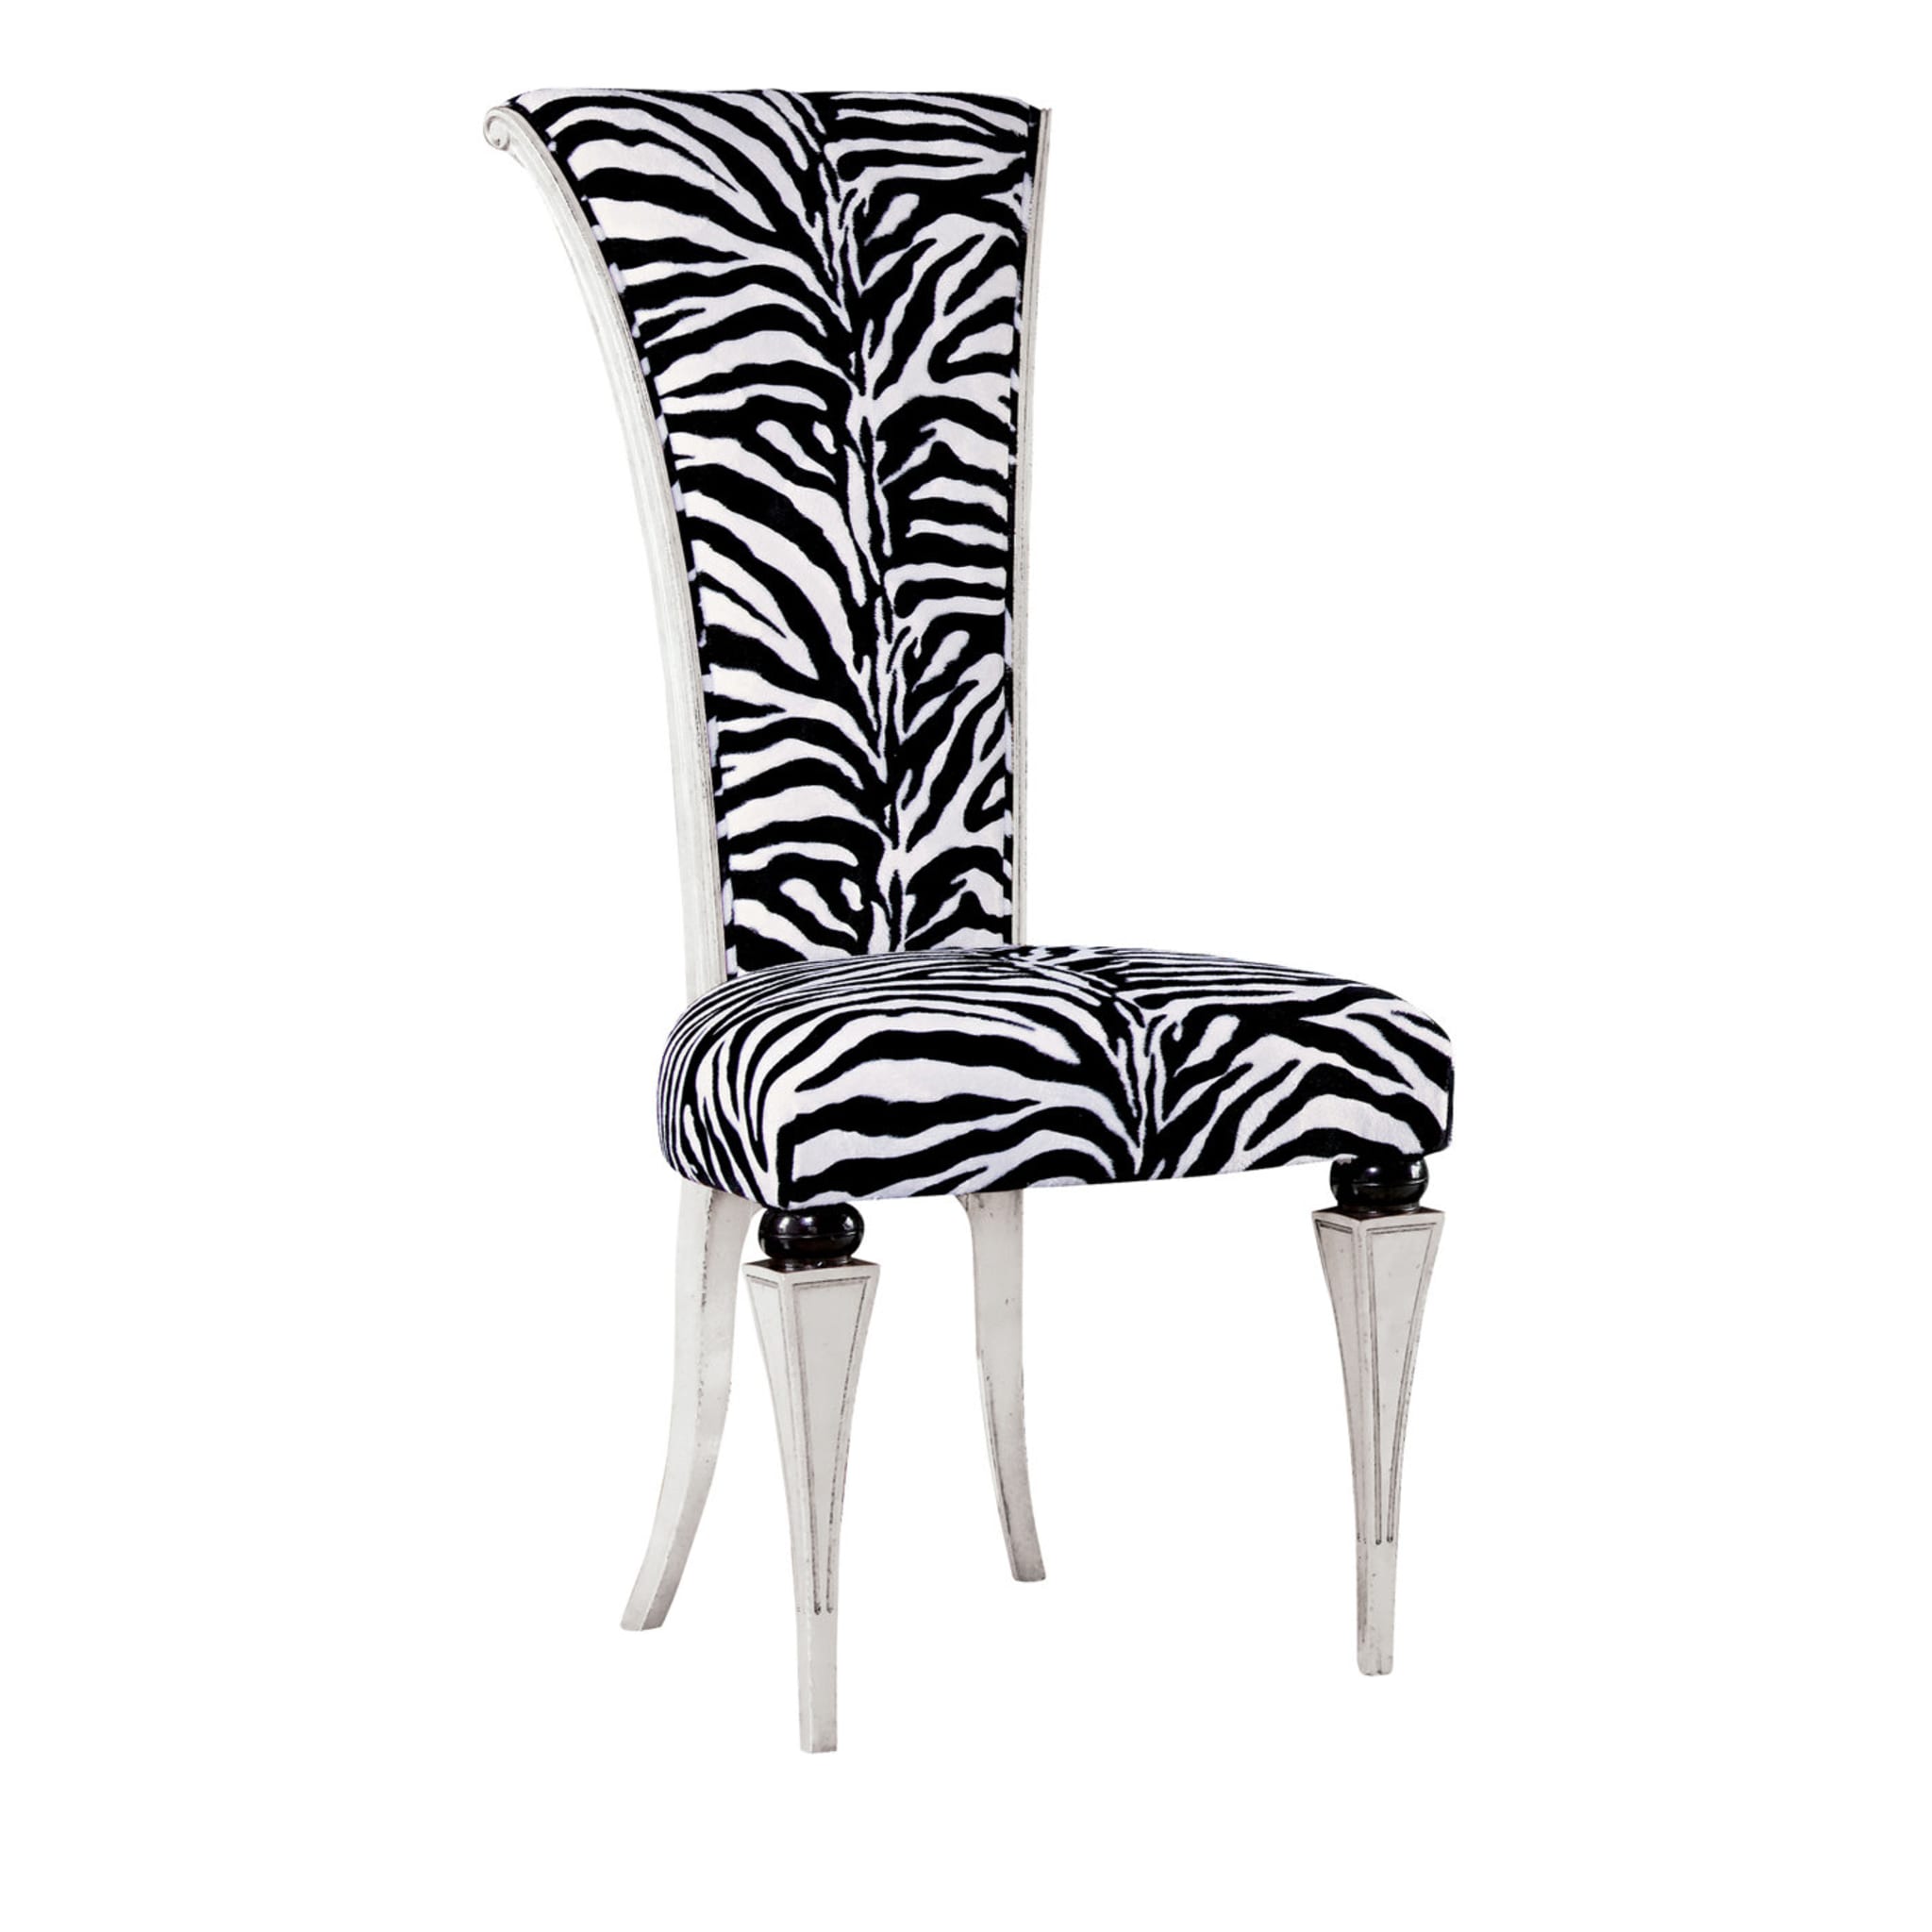 Zebra-print Dining Chair - Main view